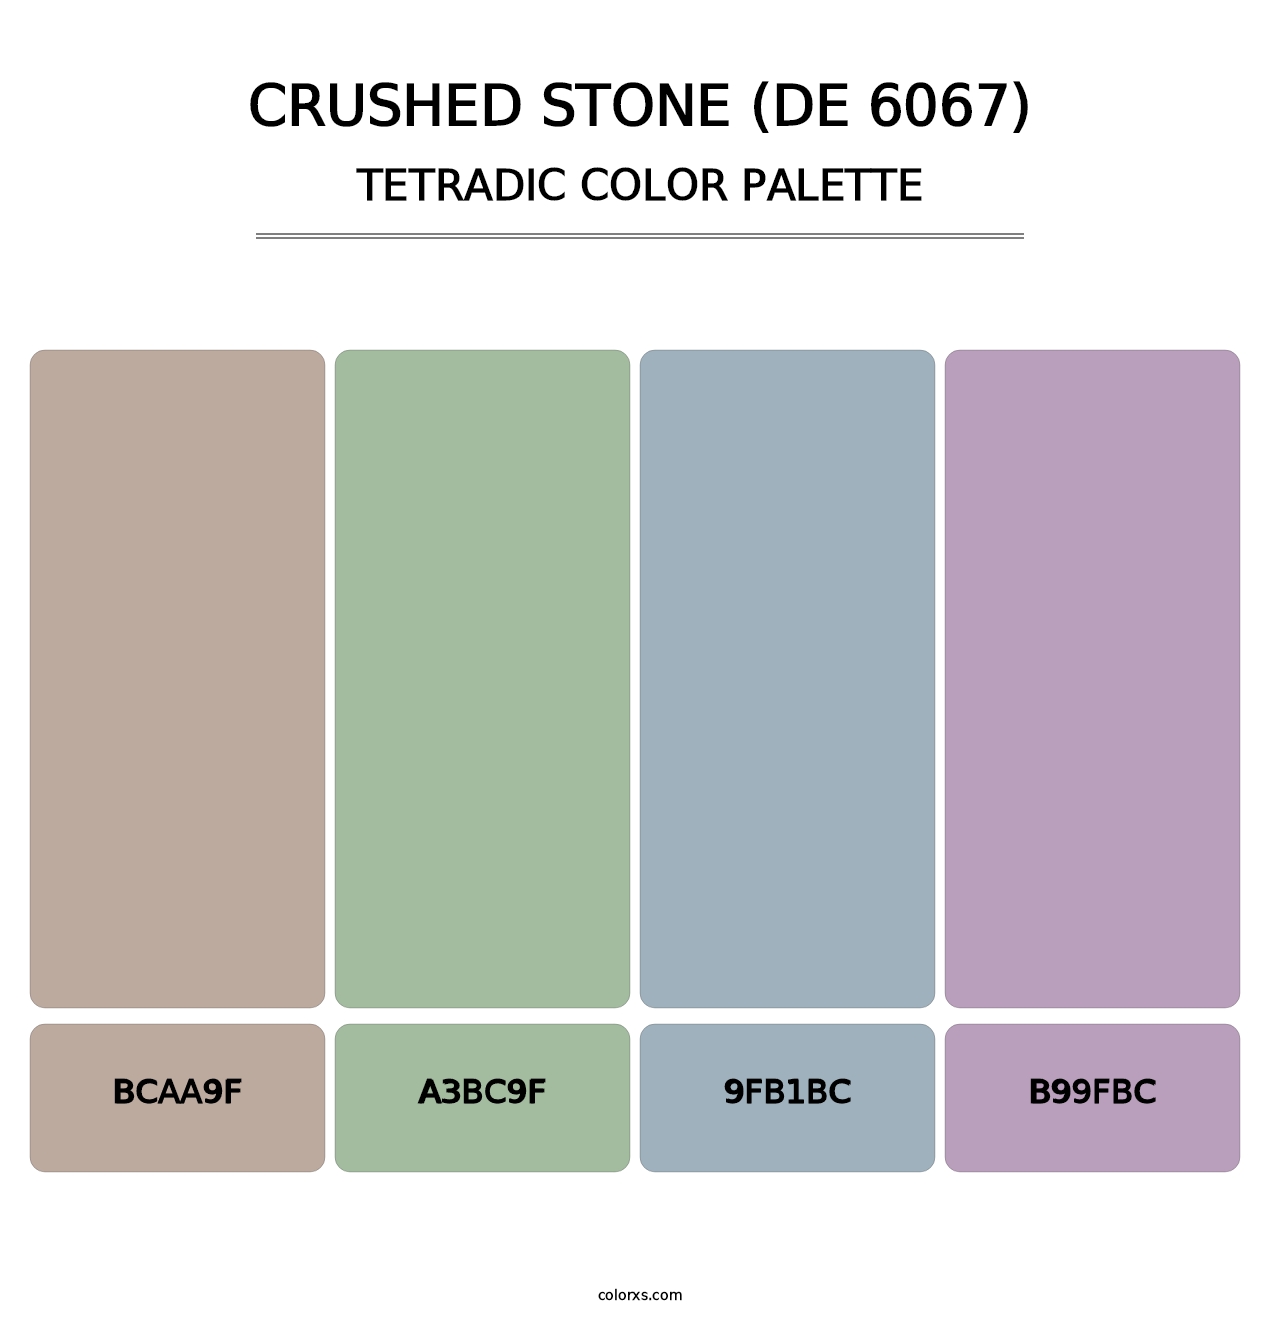 Crushed Stone (DE 6067) - Tetradic Color Palette